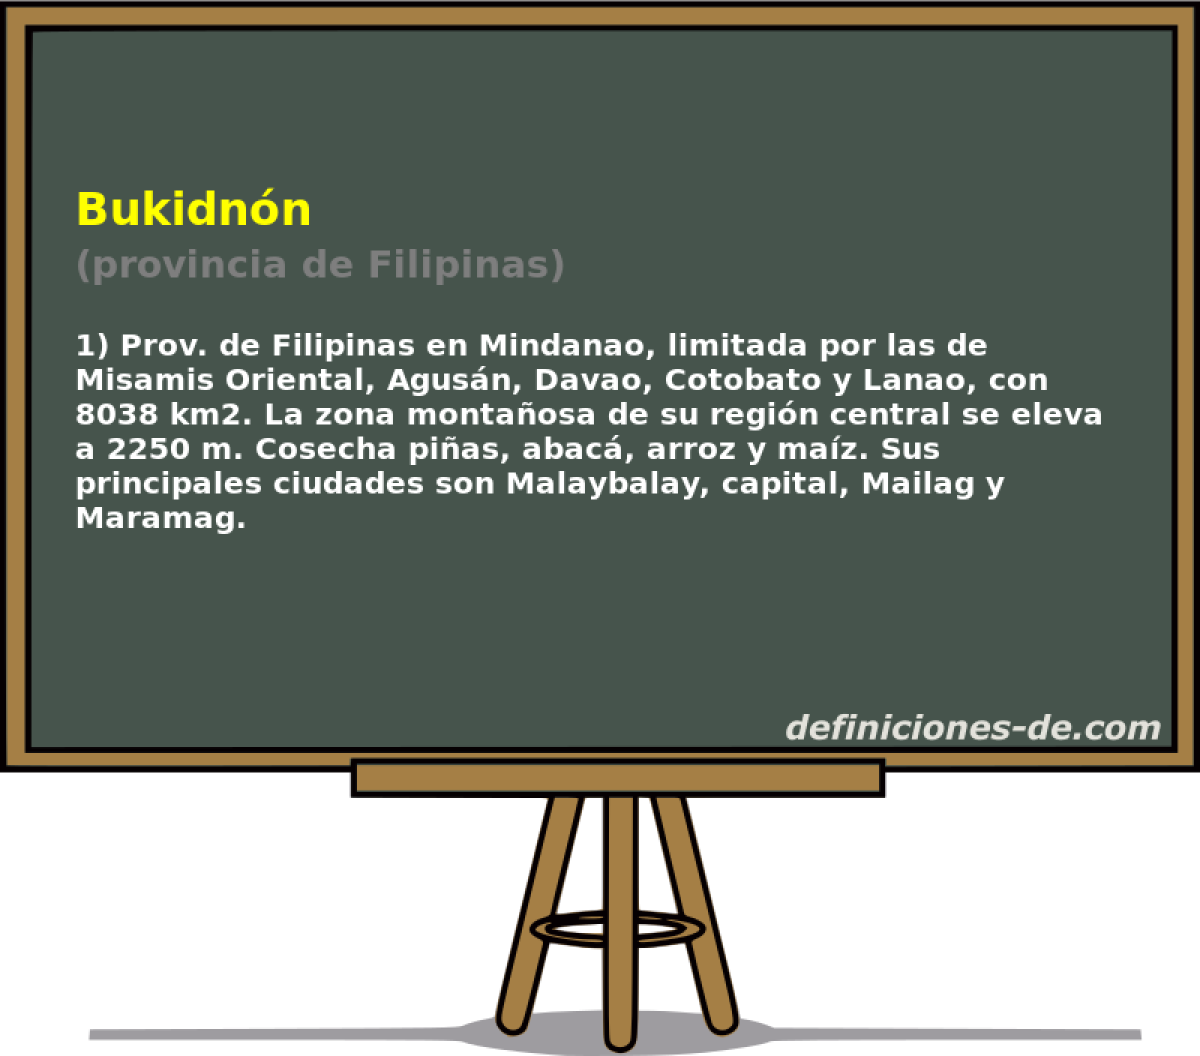 Bukidnn (provincia de Filipinas)